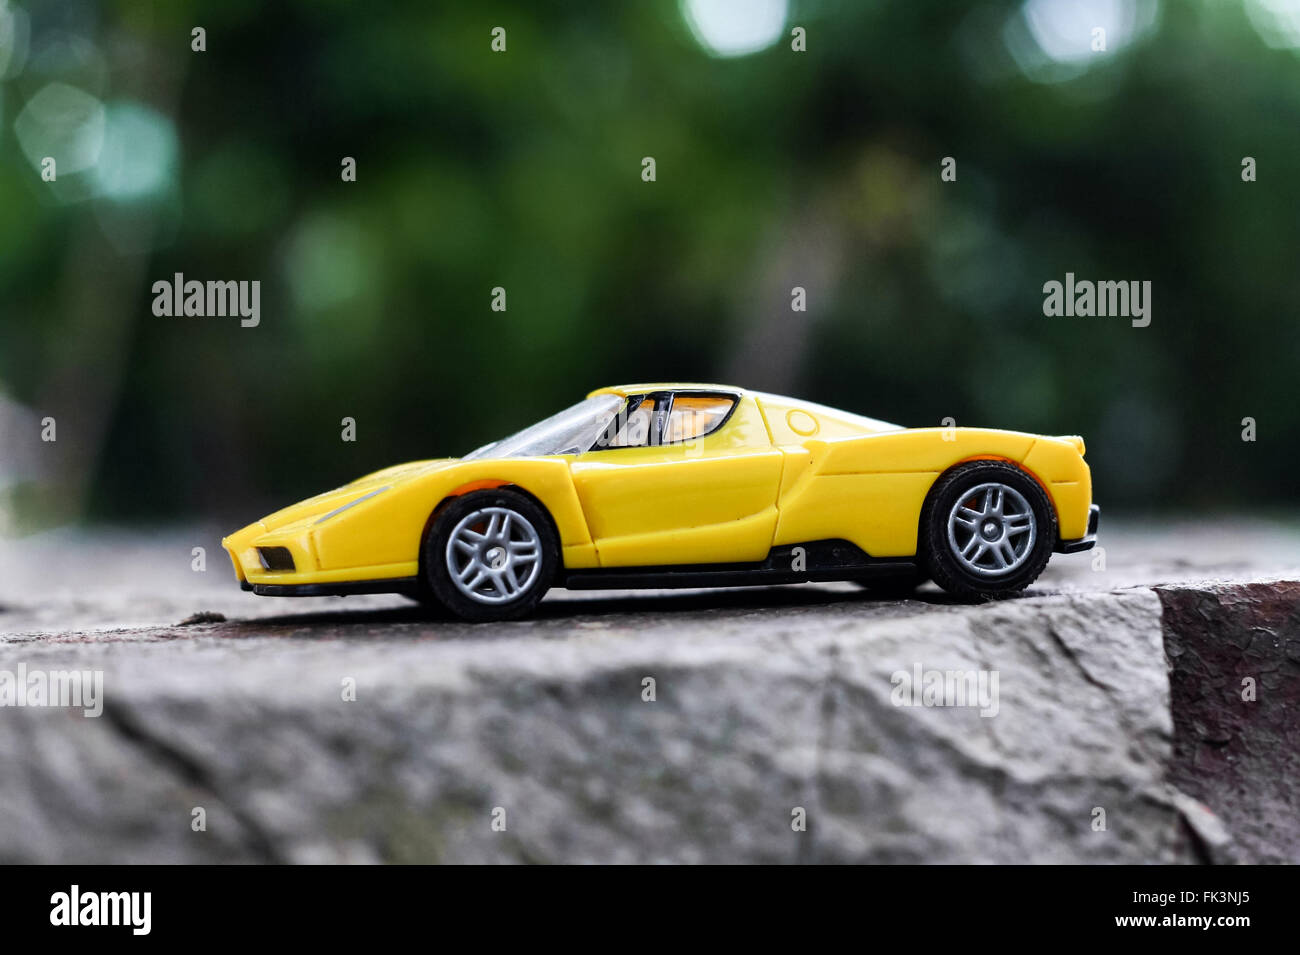 Yellow toy car Stock Photo